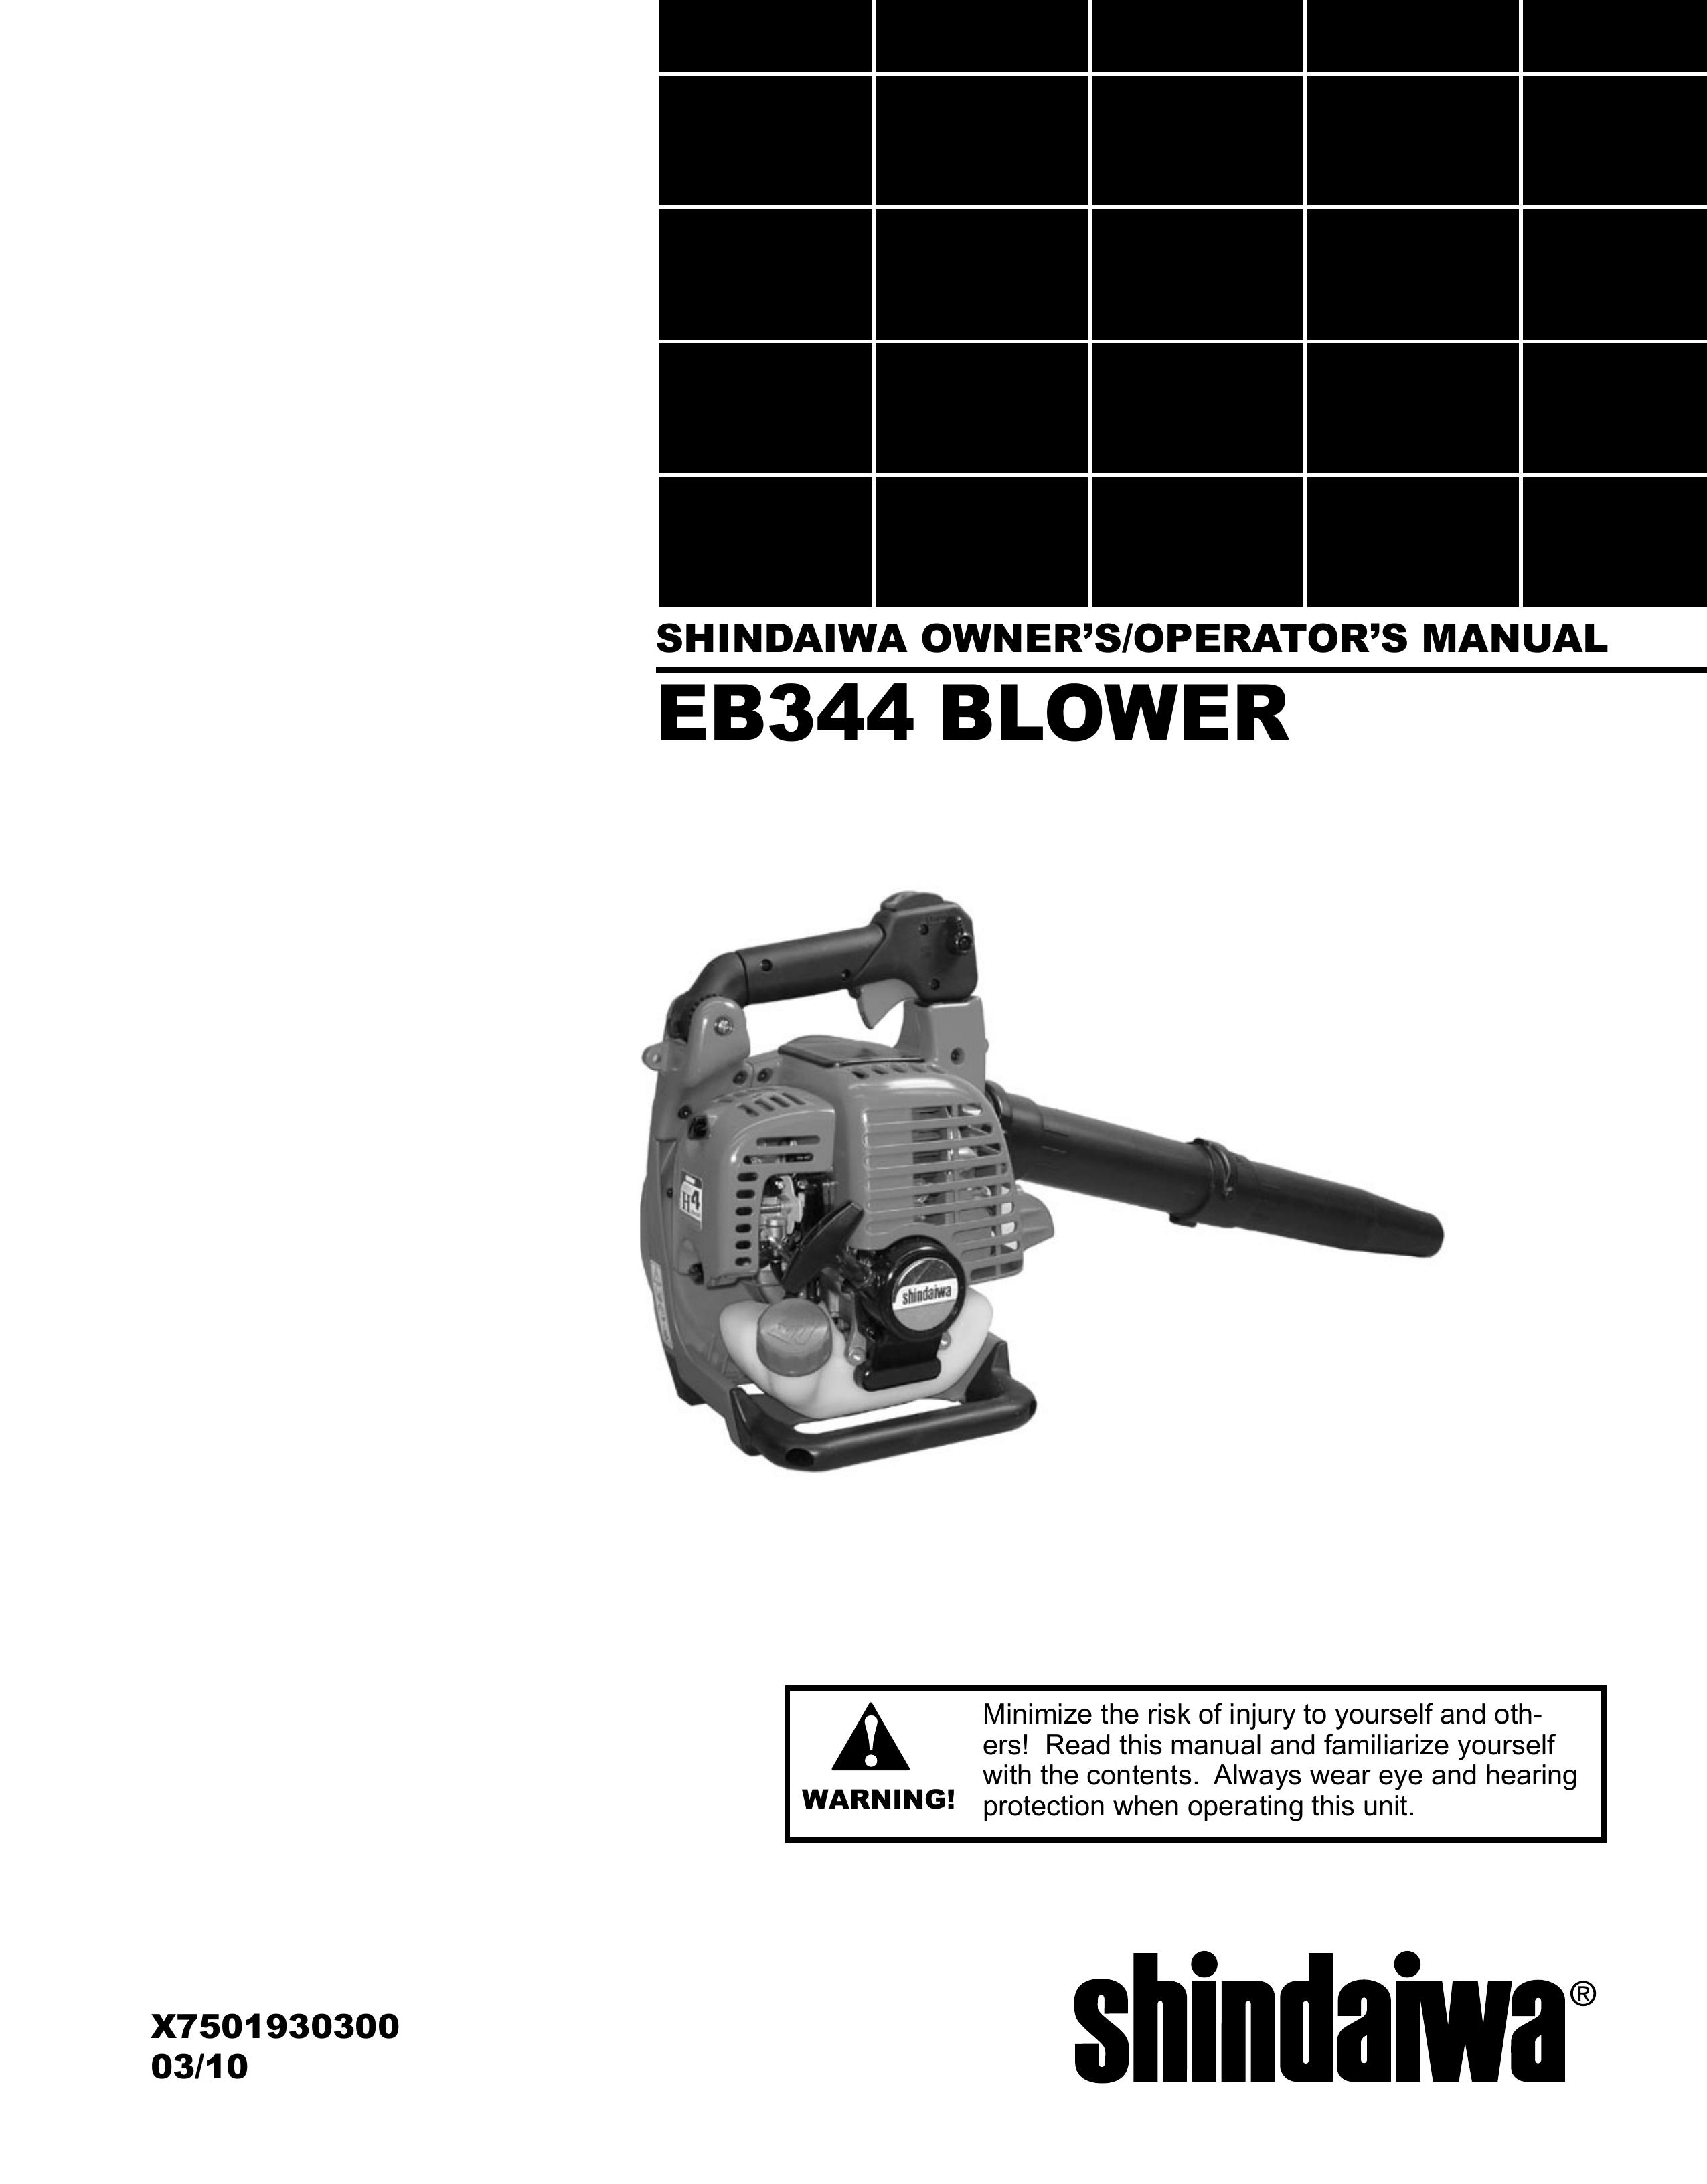 Shindaiwa EB344 Blower User Manual